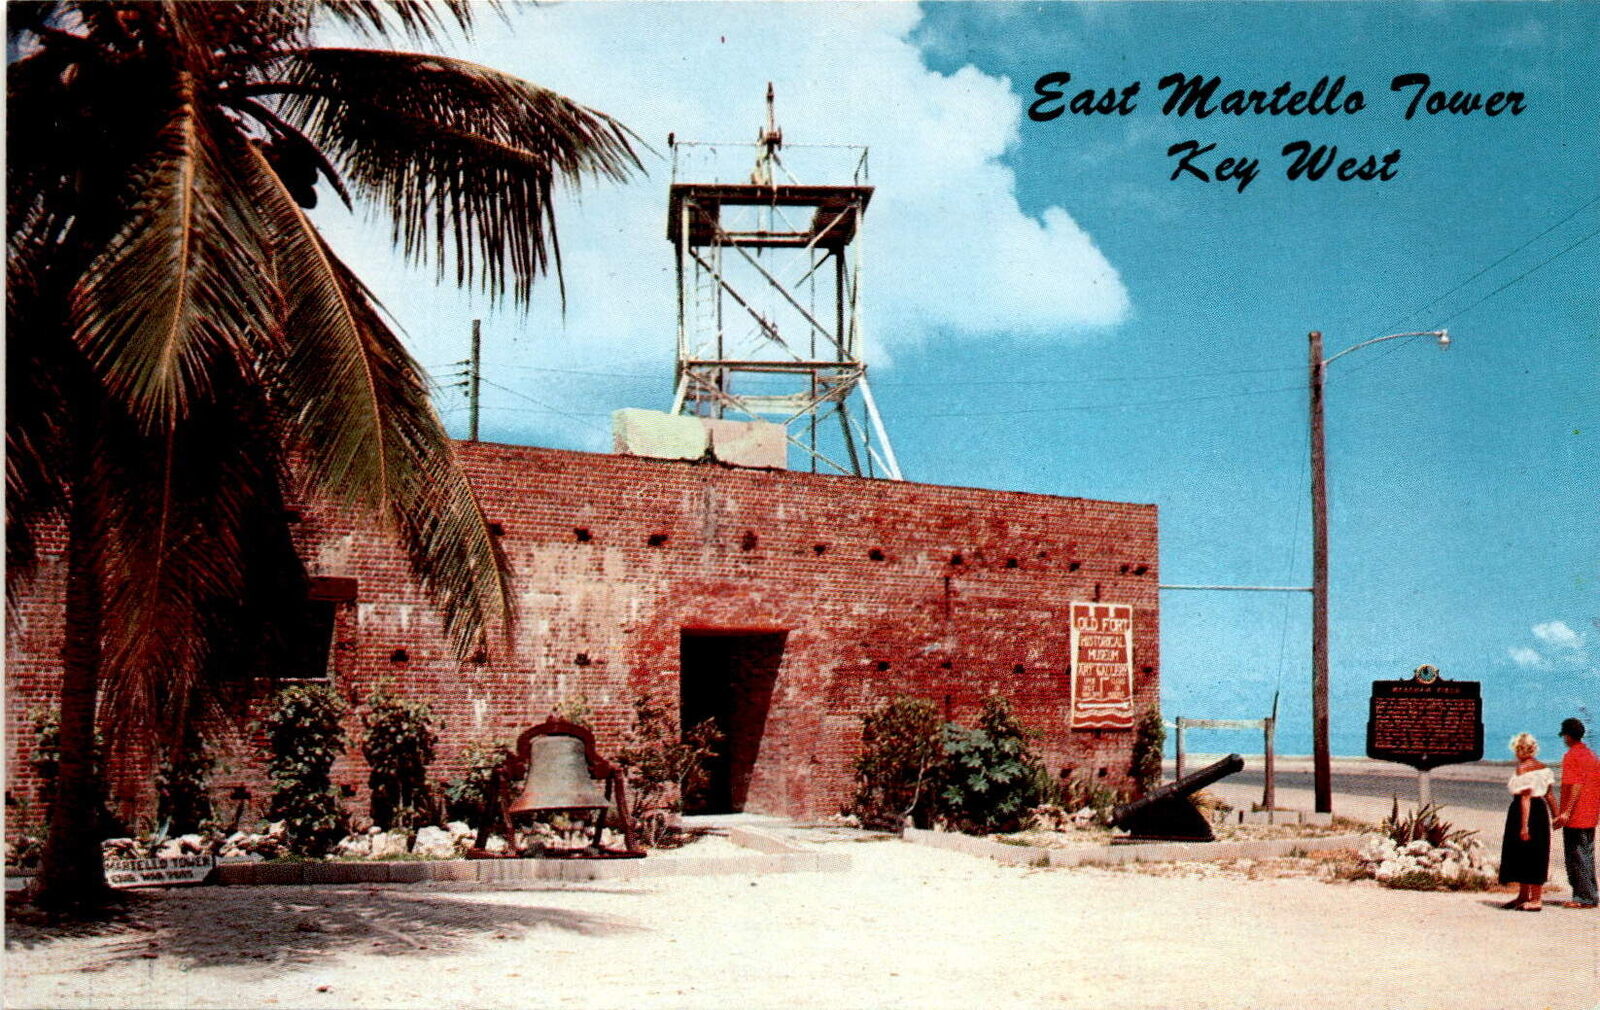 Key West, Florida, East Martello Tower, historical site, art gallery, Postcard